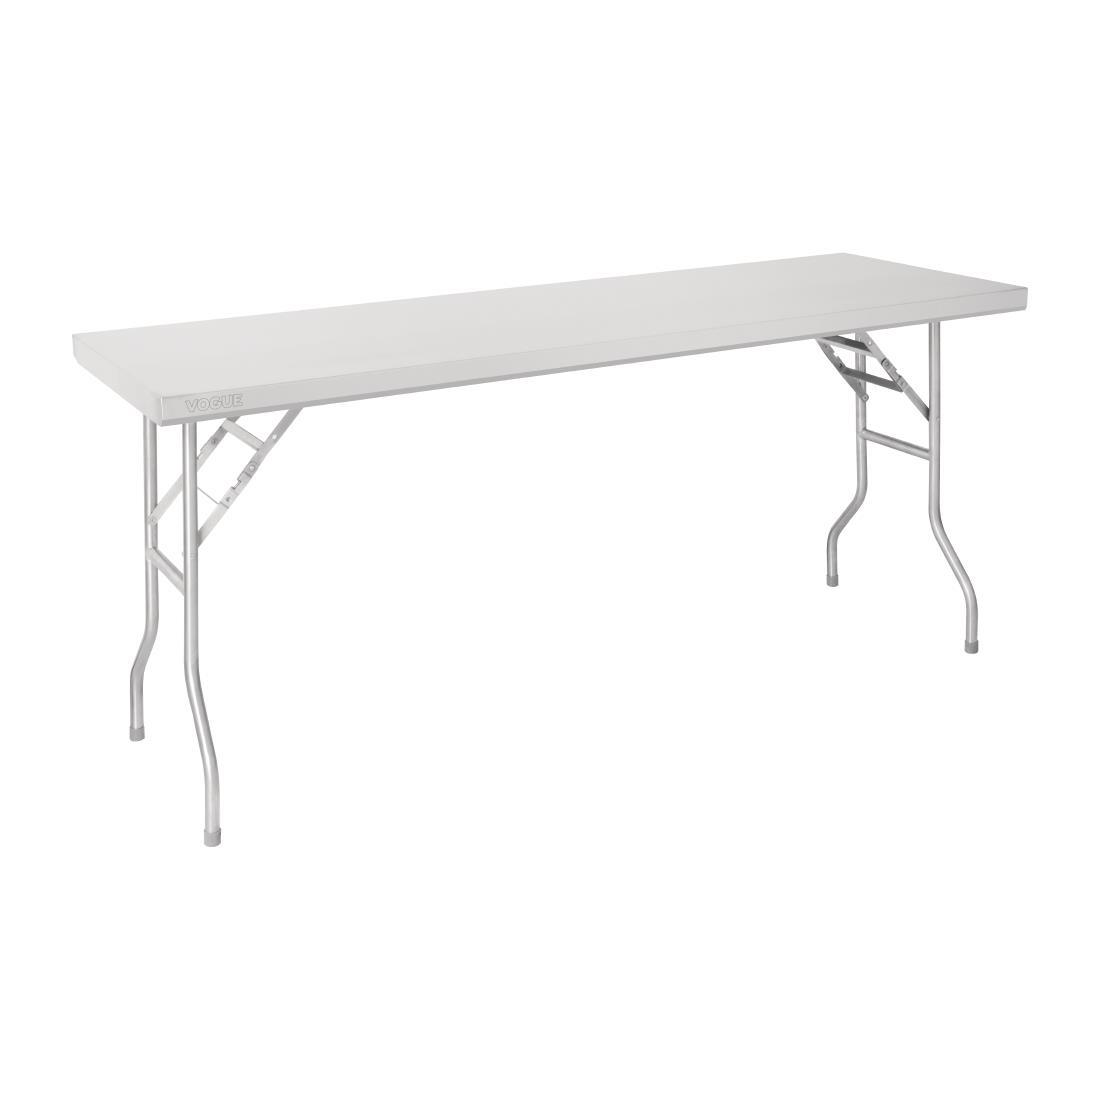 Vogue St/St Folding Work Table 1830x760x780 - DR195  - 3